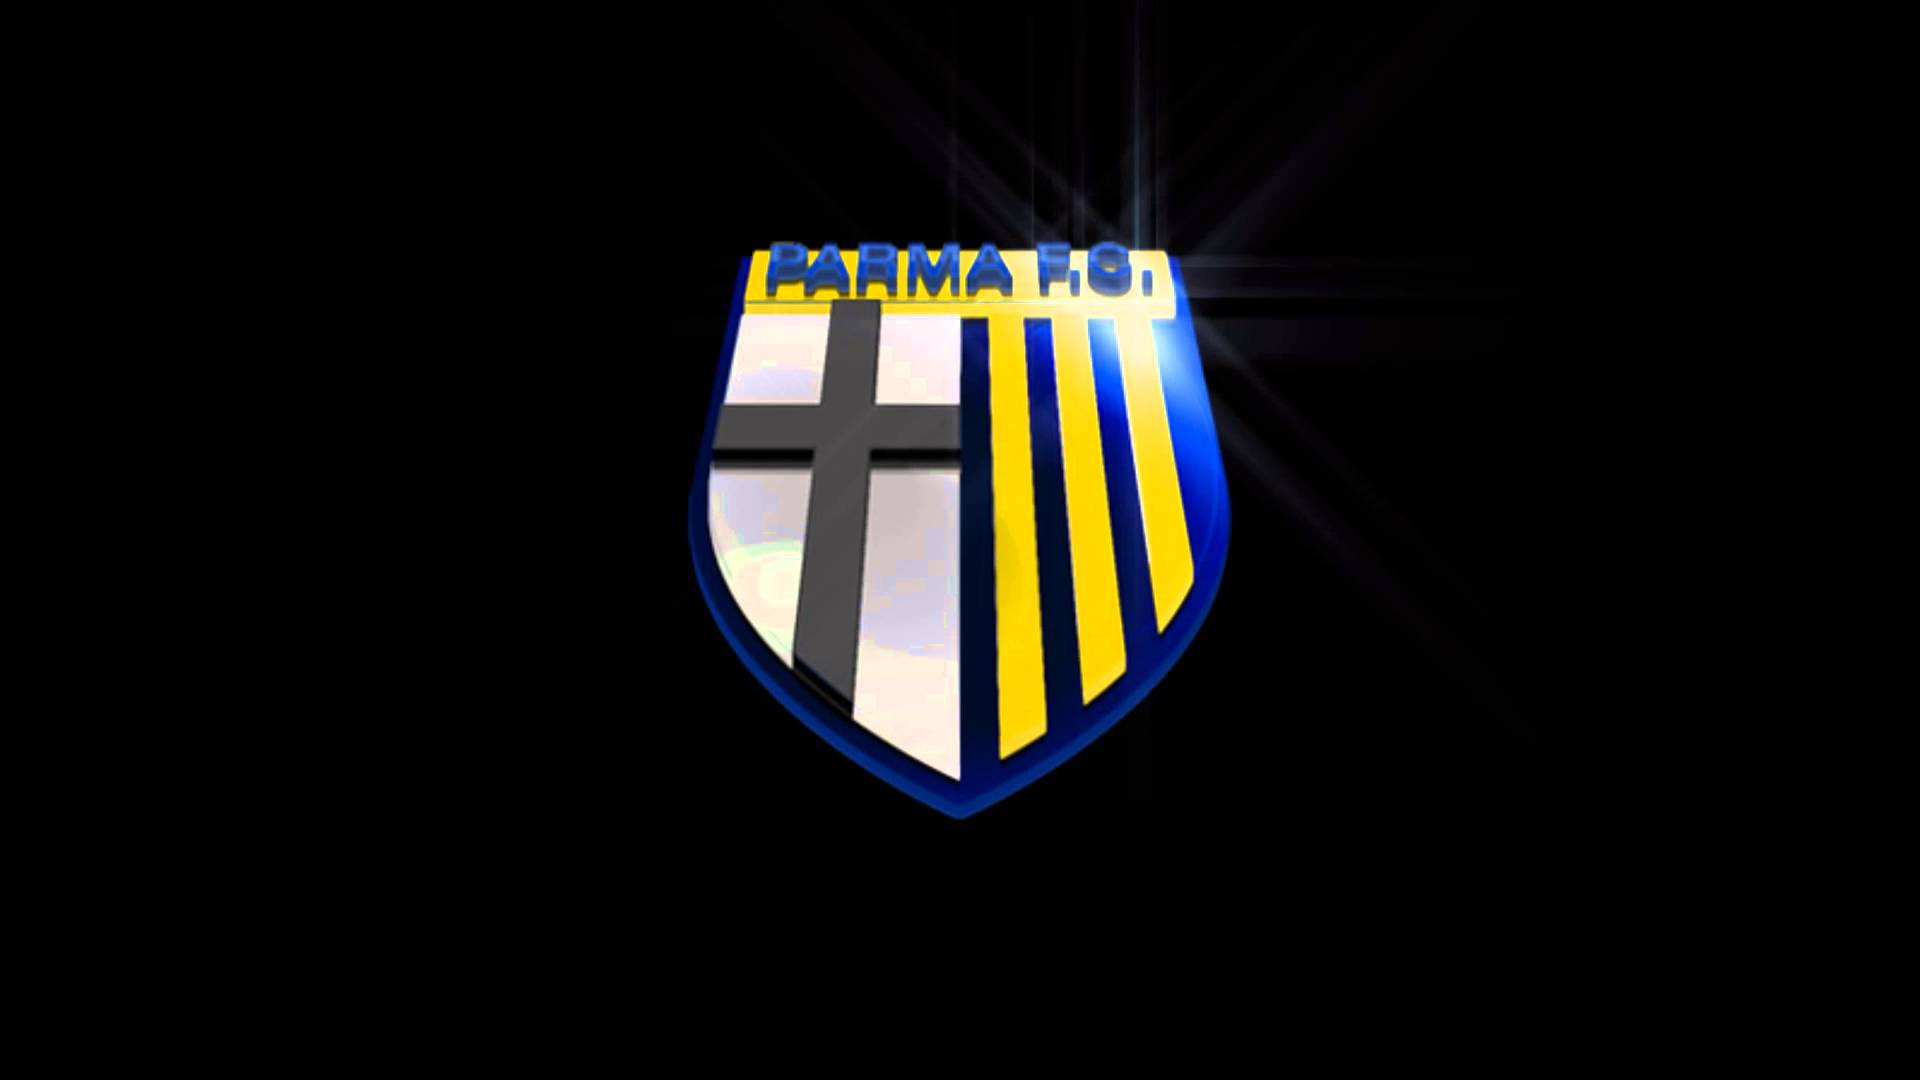 Pes 2016 Parma Fc Replay logo